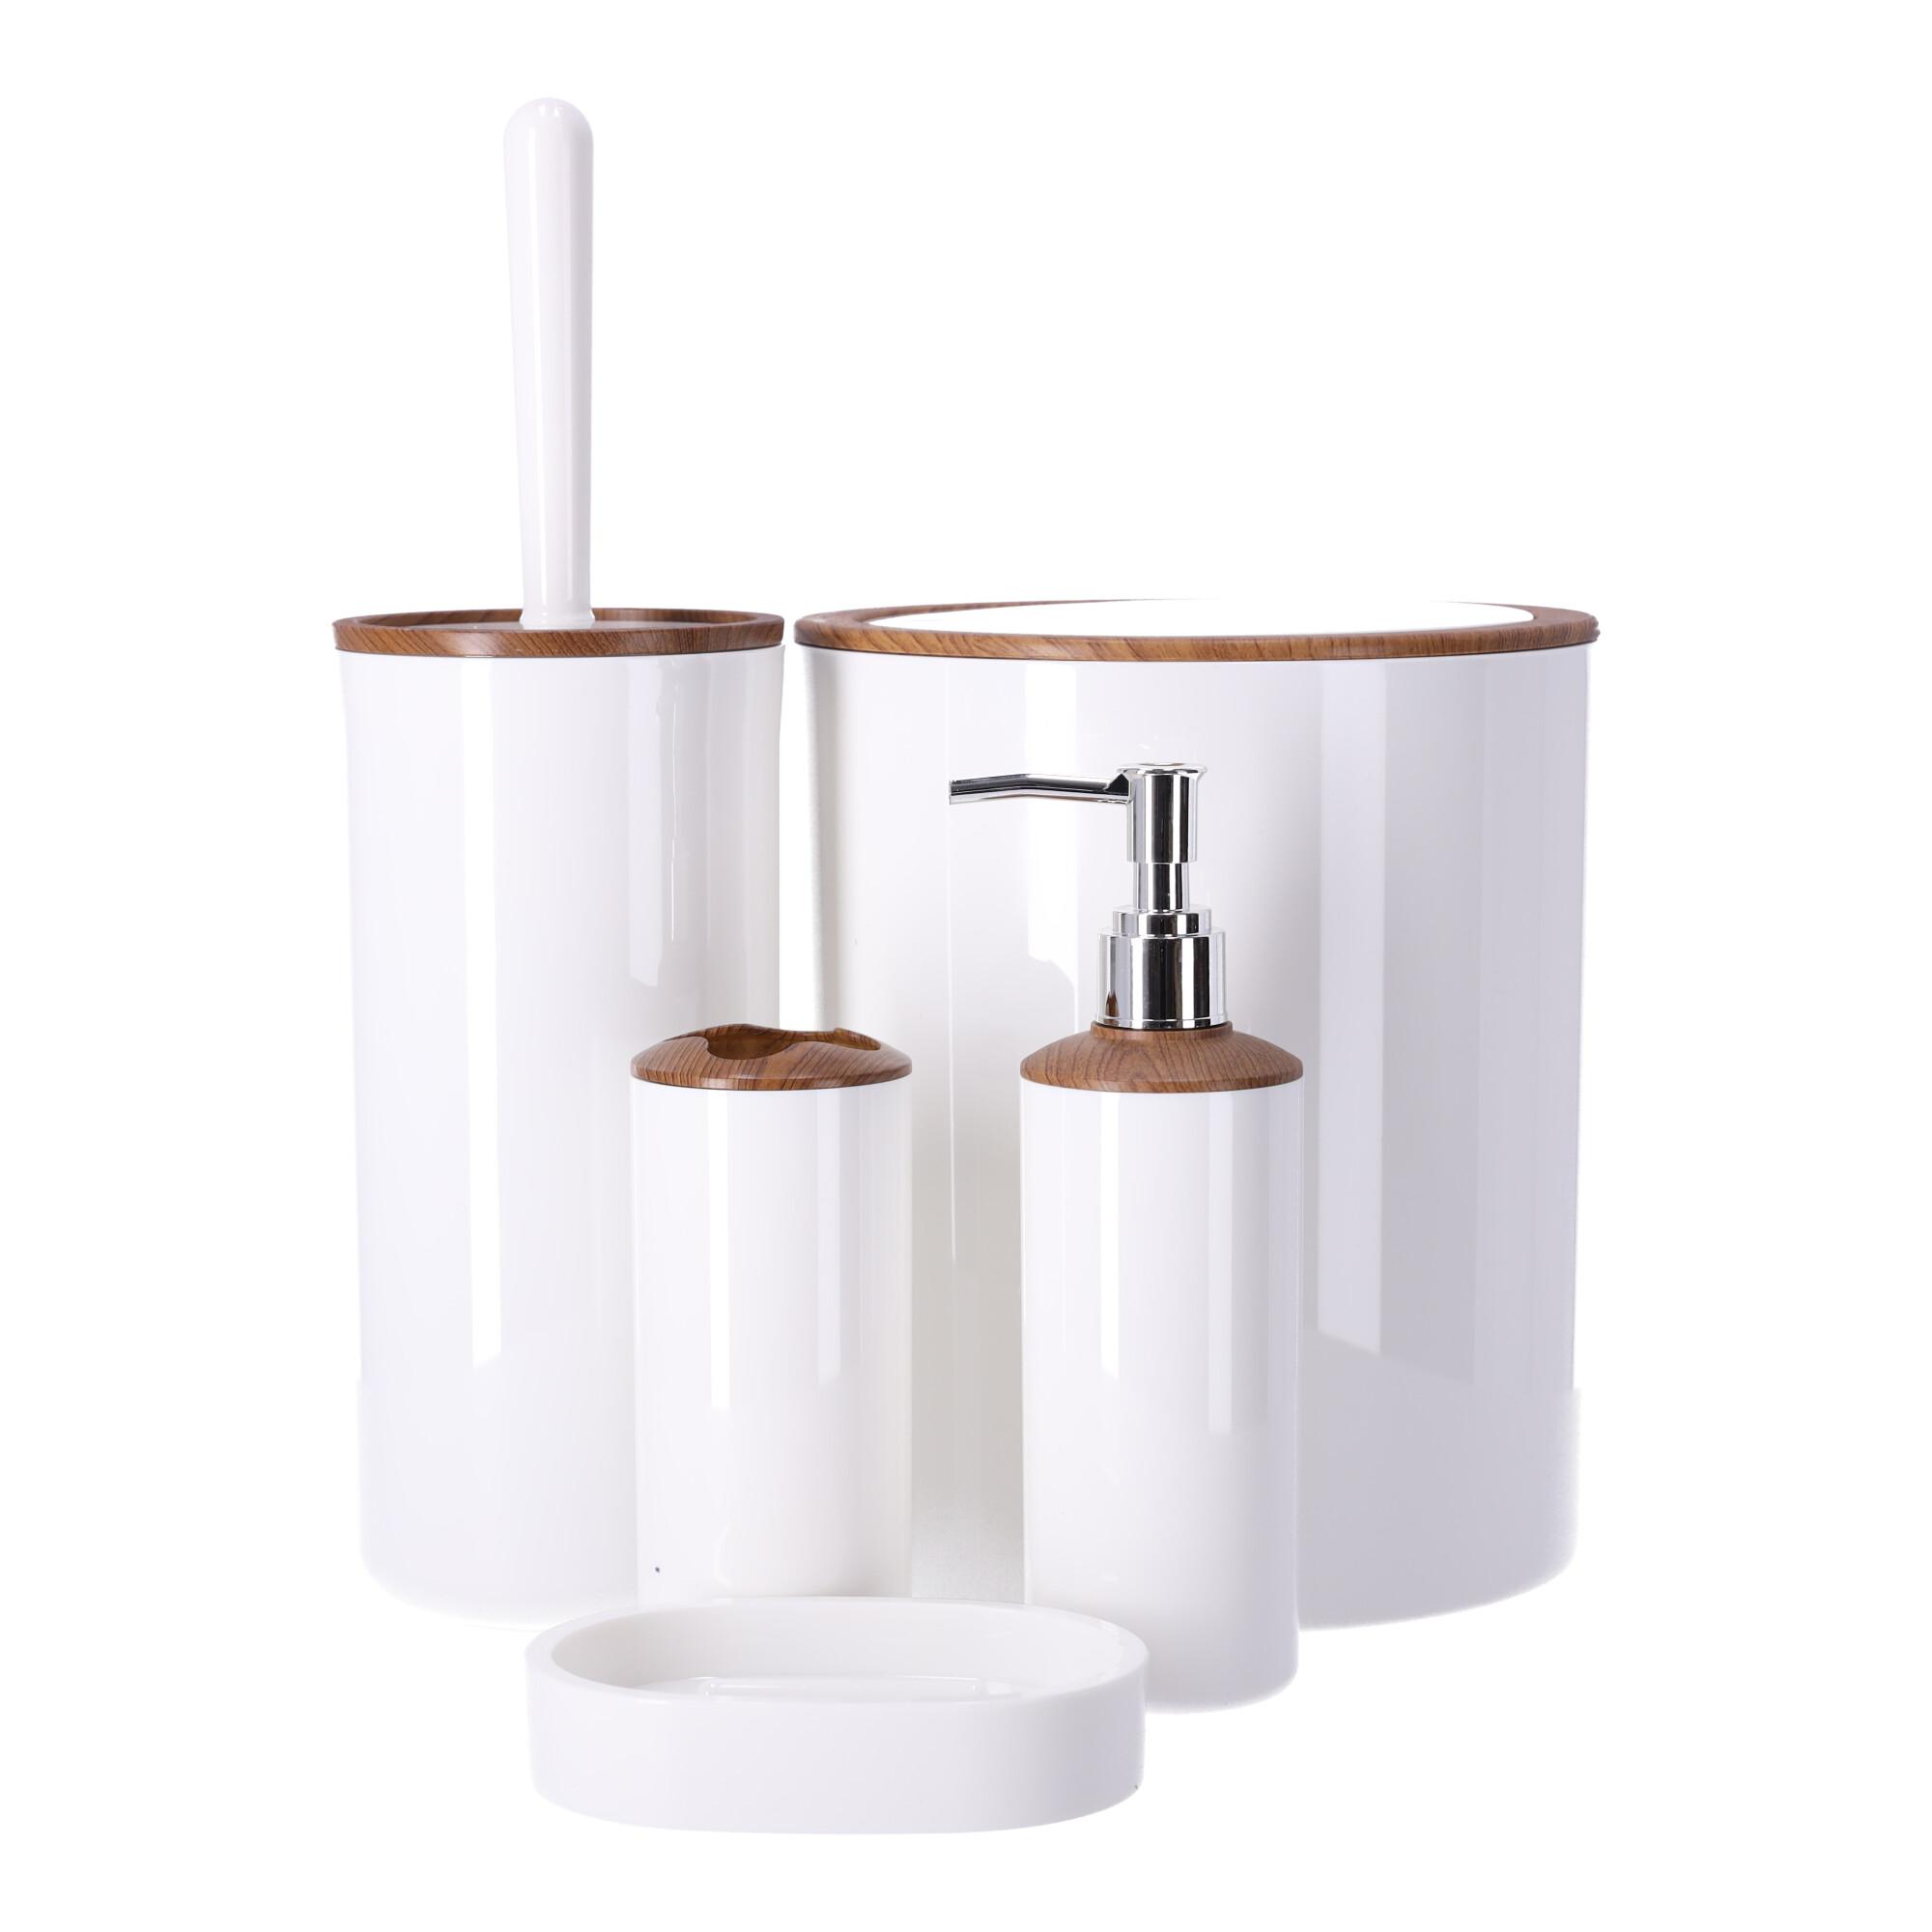 Bathroom accessories set of 5 items BERRETTI, white + wood